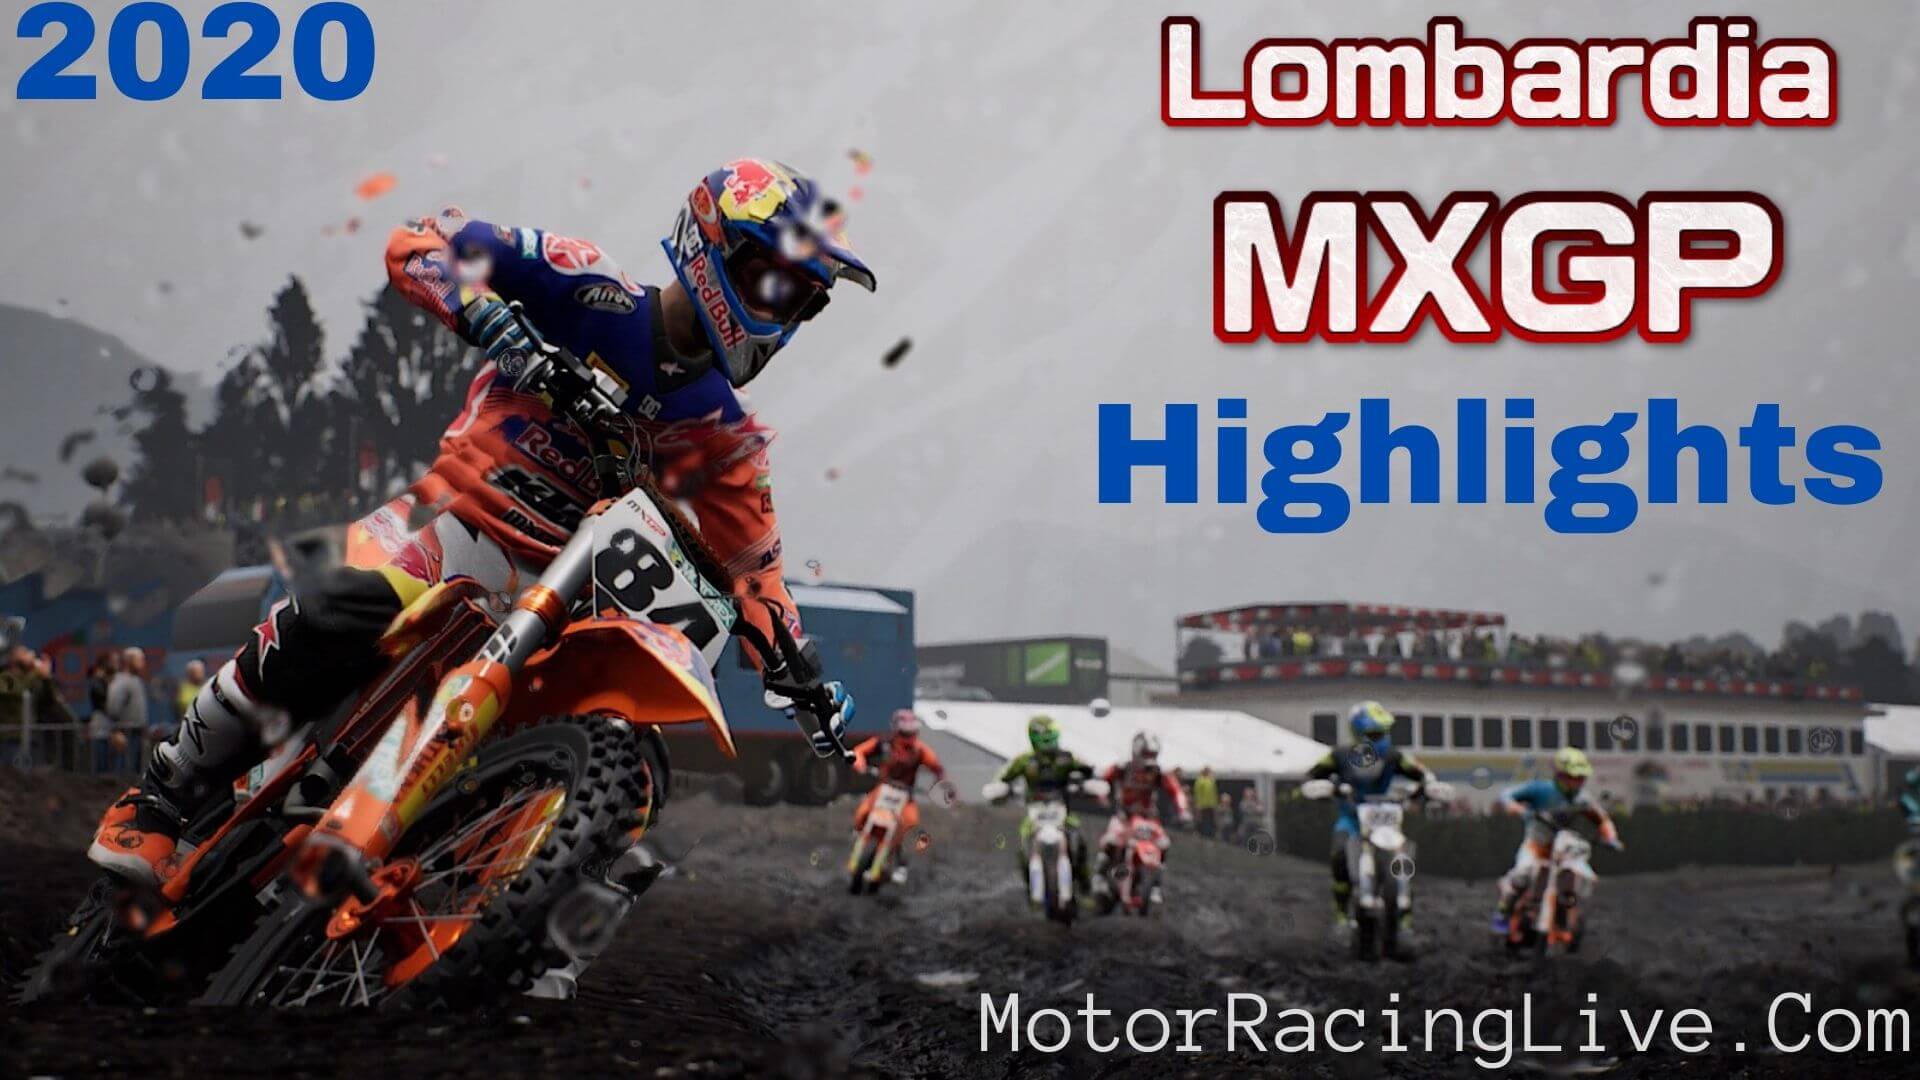 Lombardia Highlights MXGP 2020